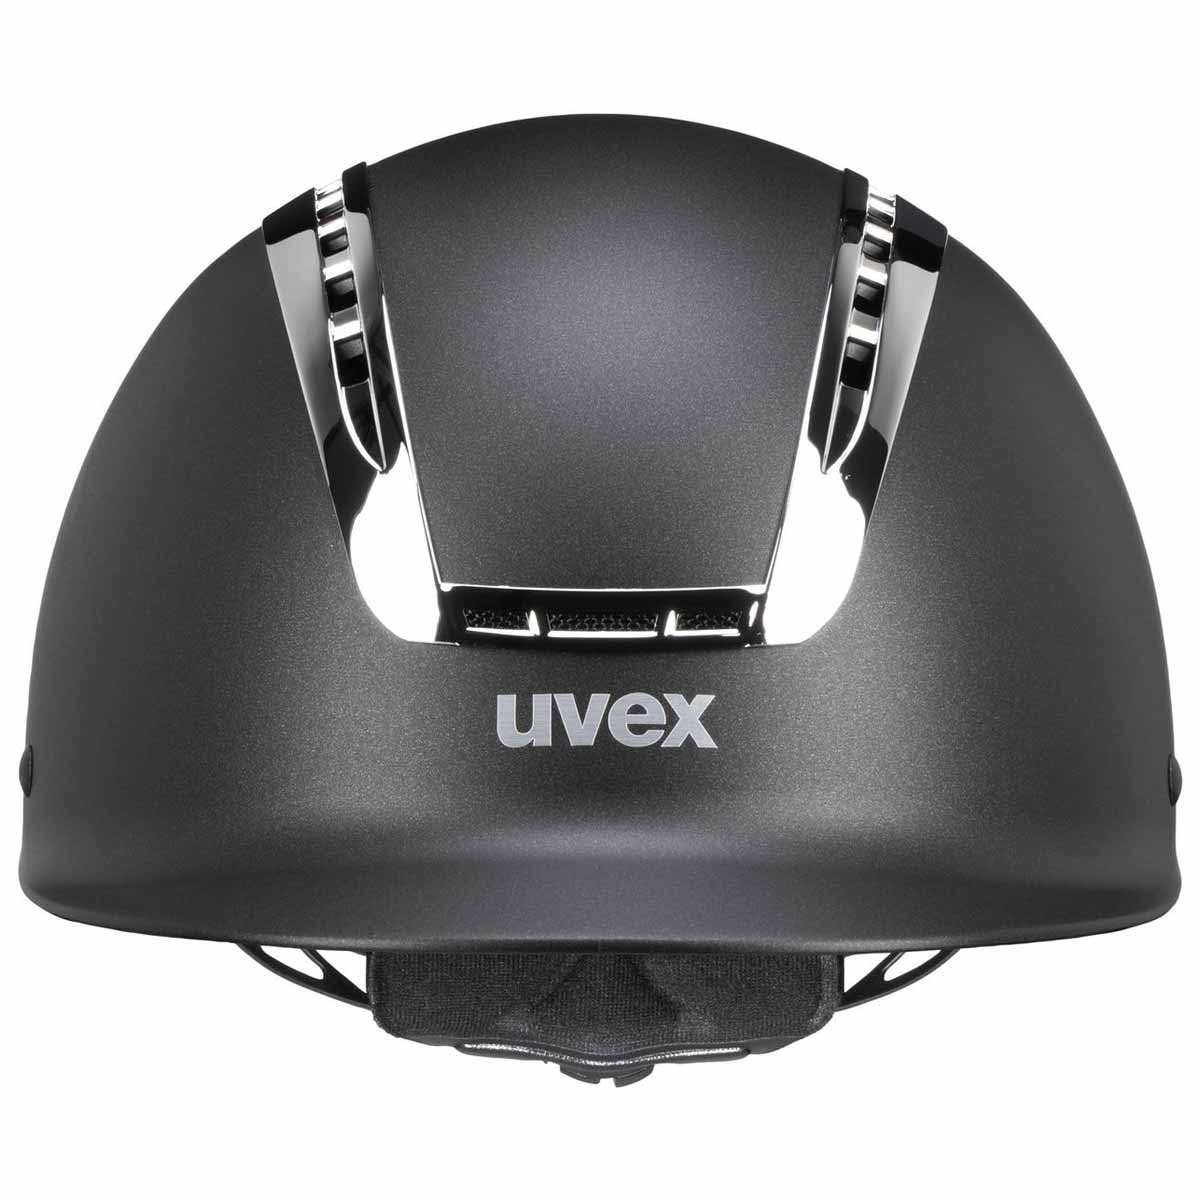 uvex suxxeed chrome riding helmet Navy matt- Koralle S